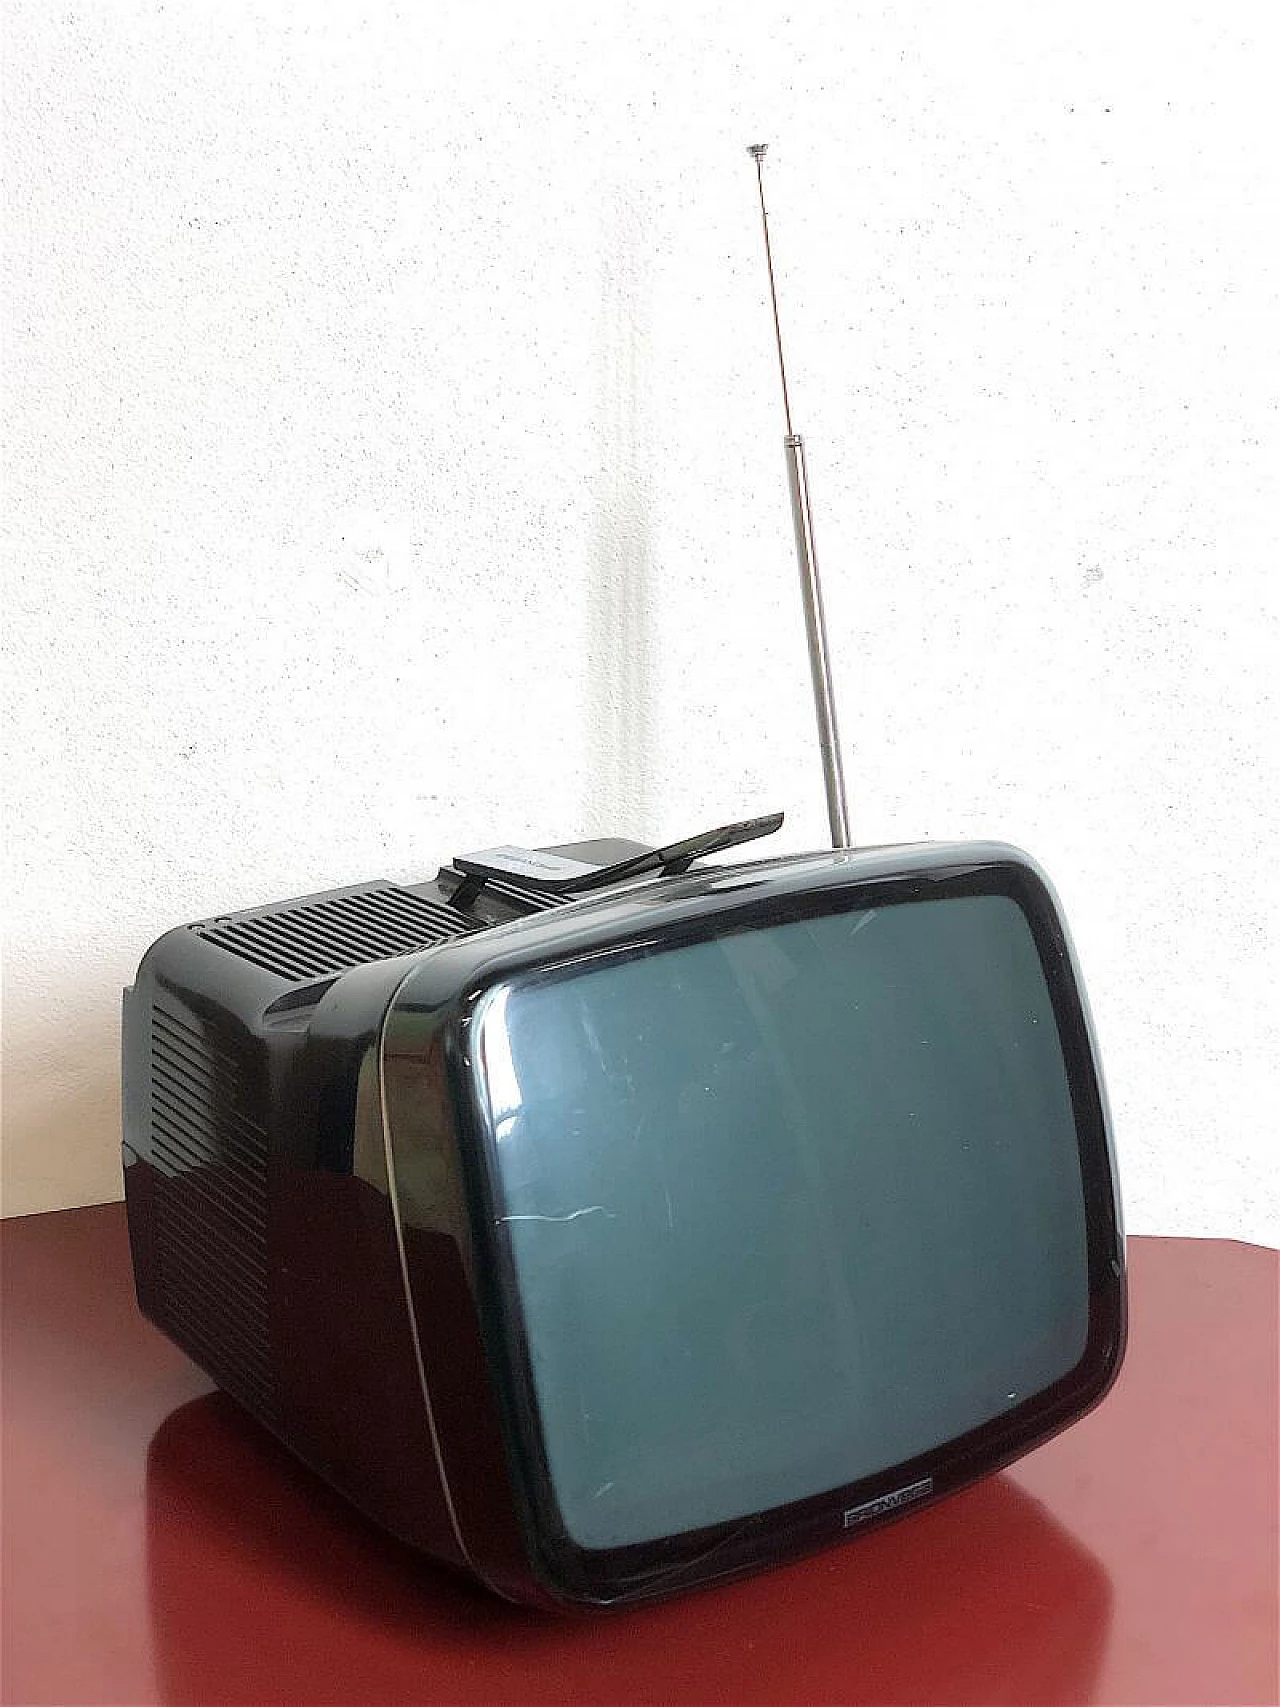 ALGOL 3 BRIONVEGA television set by Marco Zanuso & Richard Sapper, 1960s 1